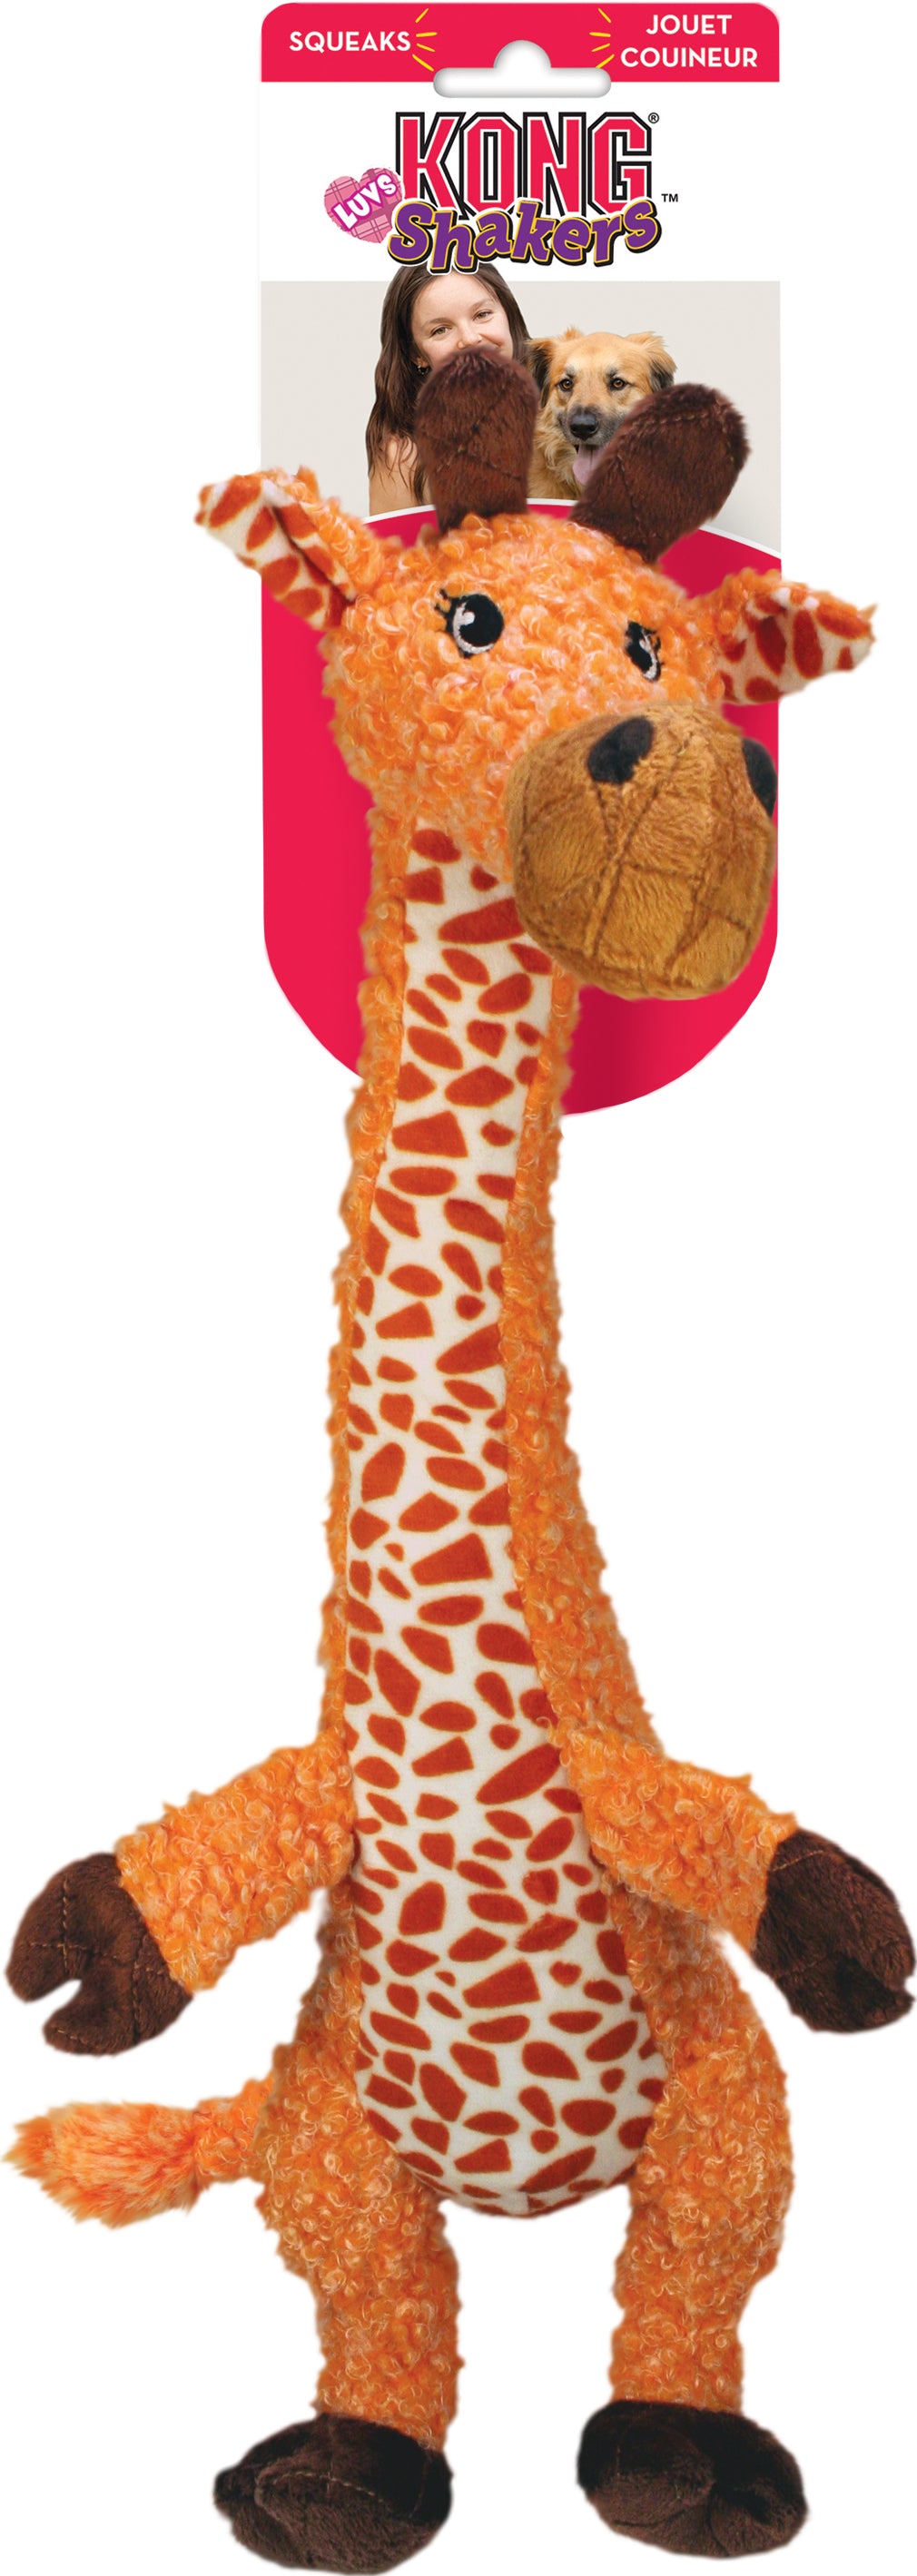 Kong Knuffel shakers giraffe - Huisdierplezier